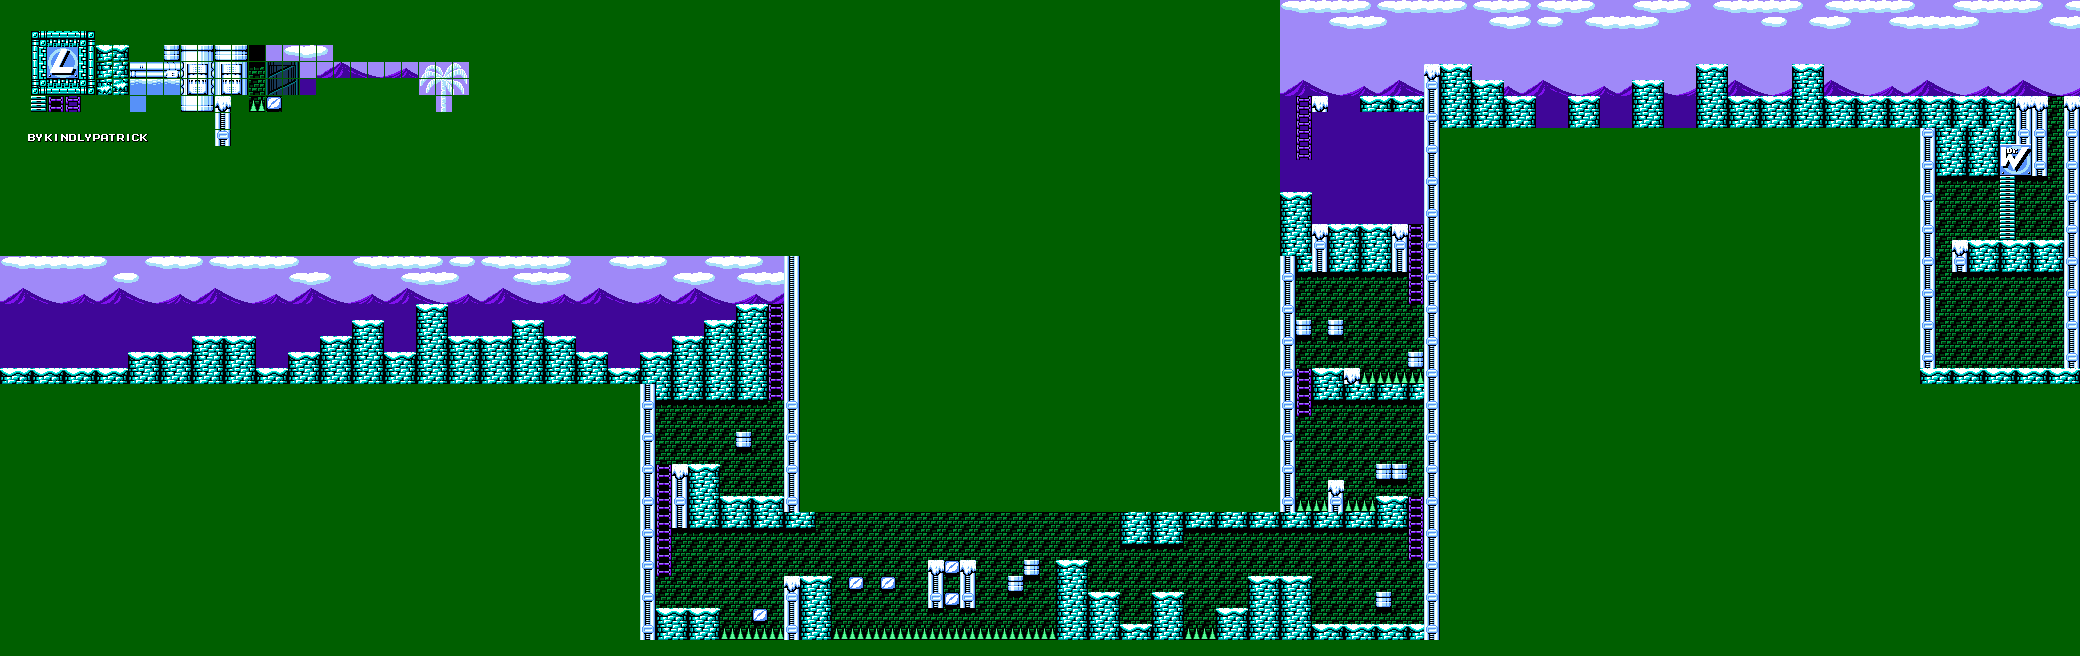 Mega Man Customs - Ice Man's Stage (Dr. Wily's Revenge, Enhanced)